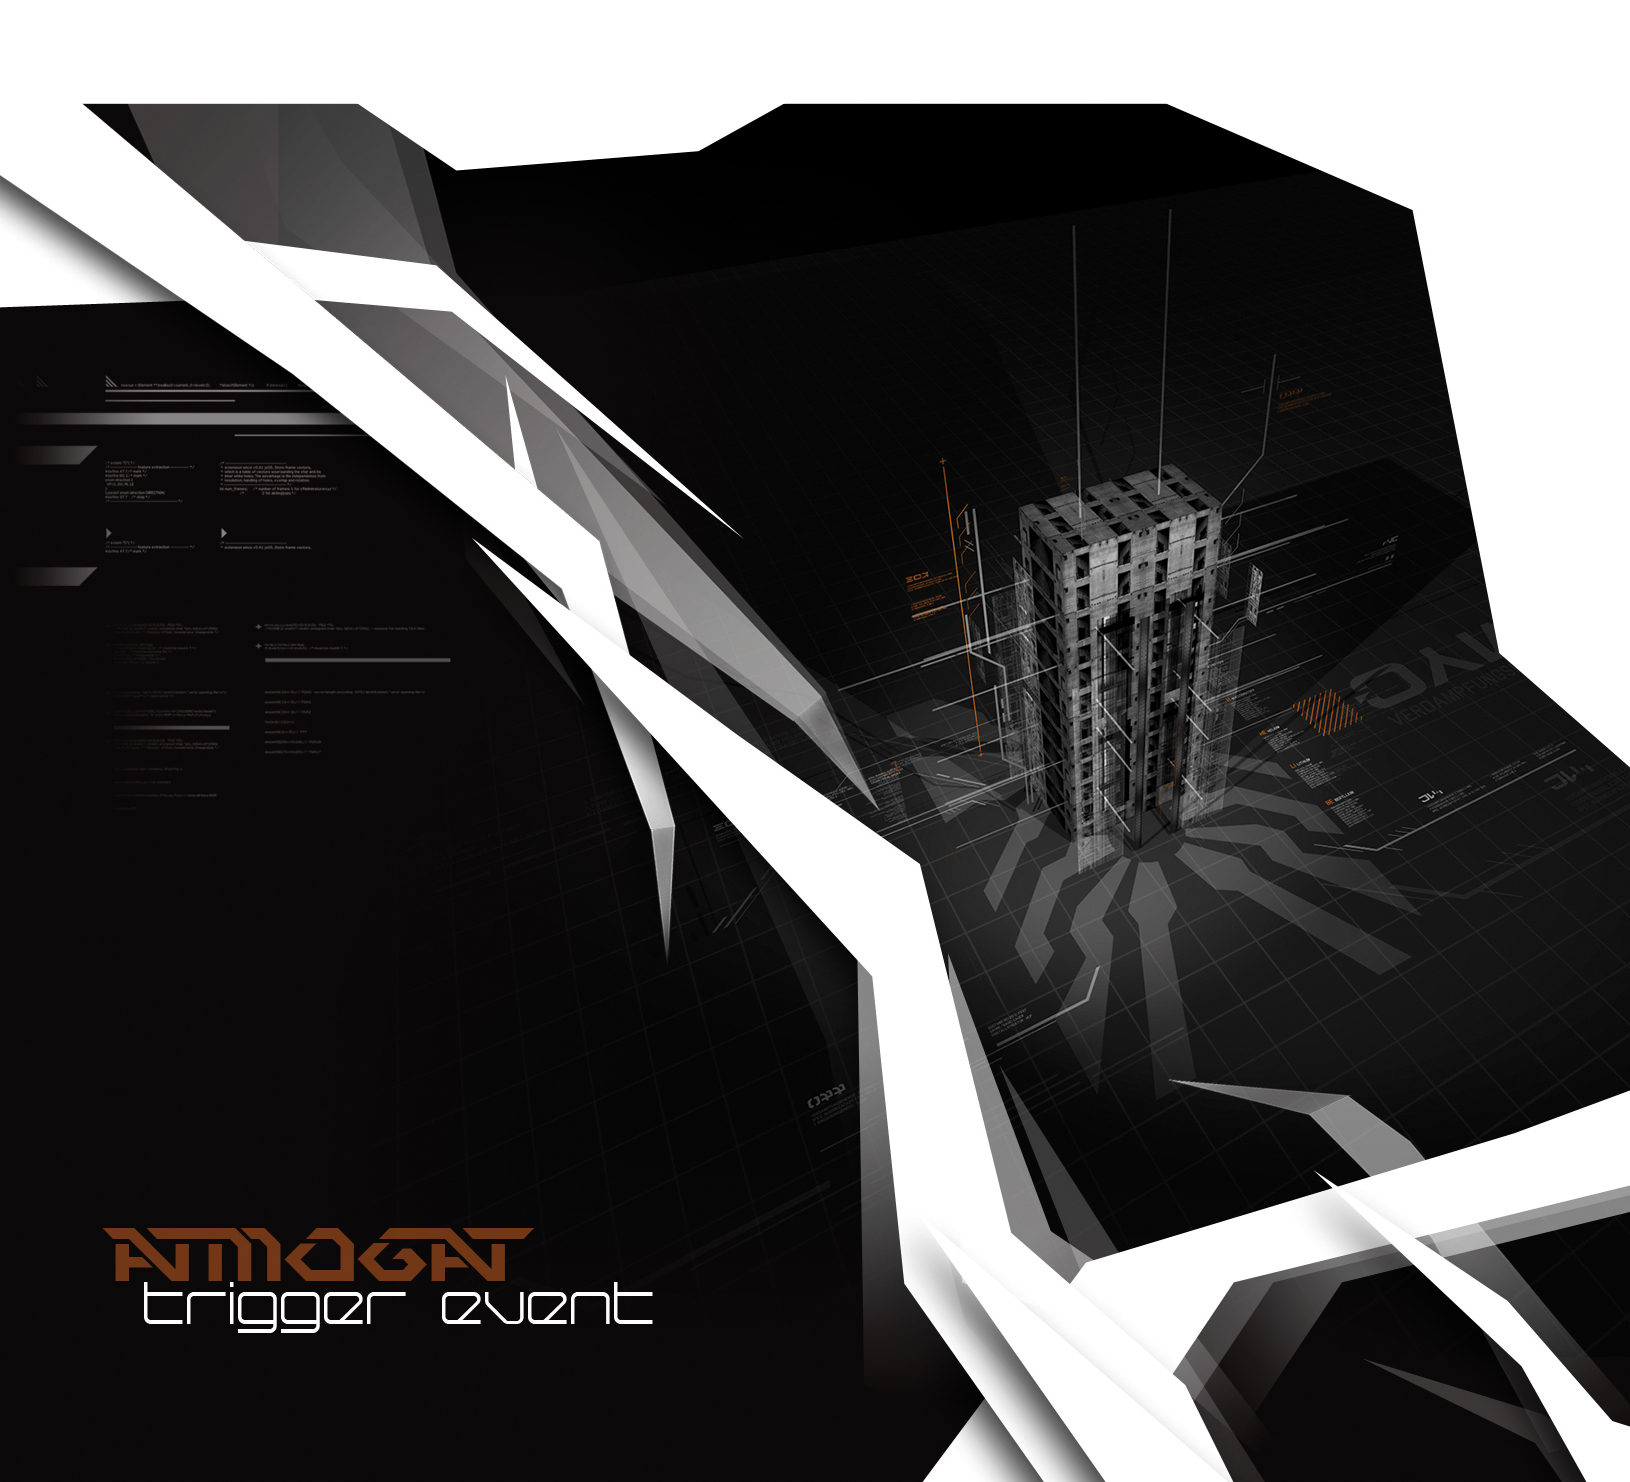 Atmogat - Trigger Event / CD